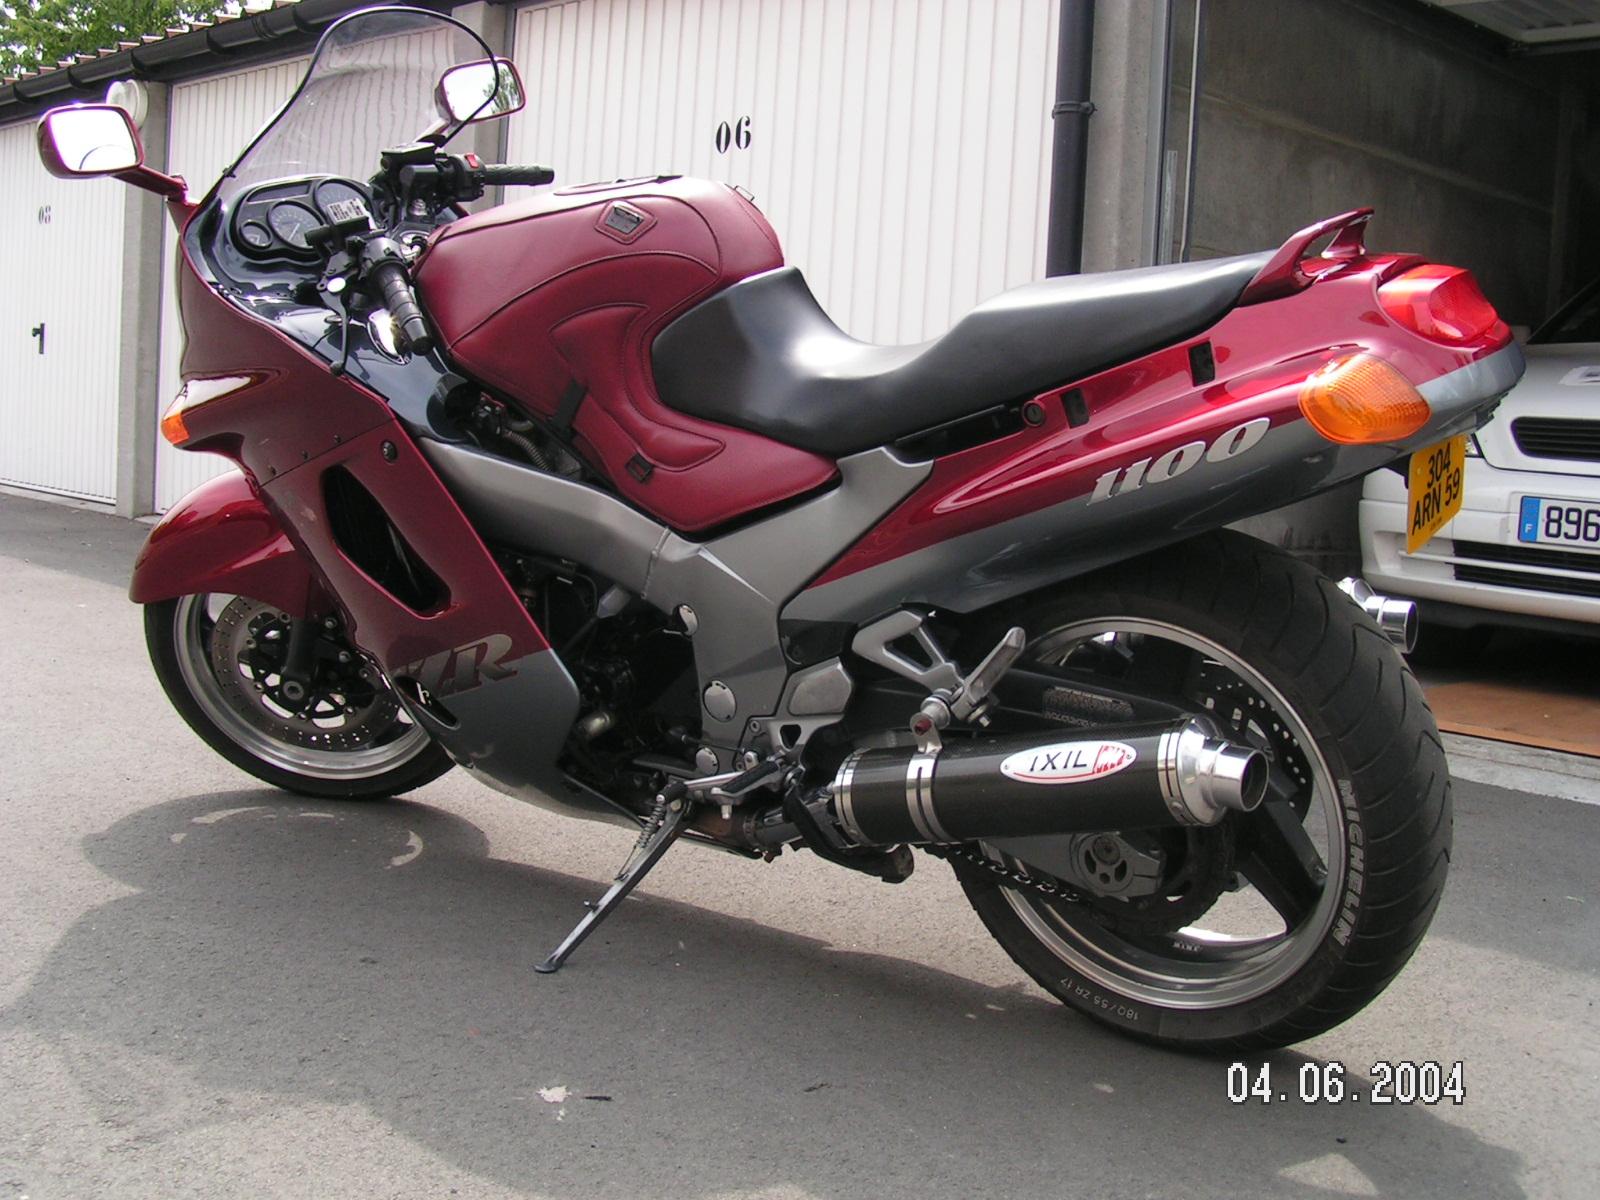 Kawasaki ZZR1100 photos - PhotoGallery with |